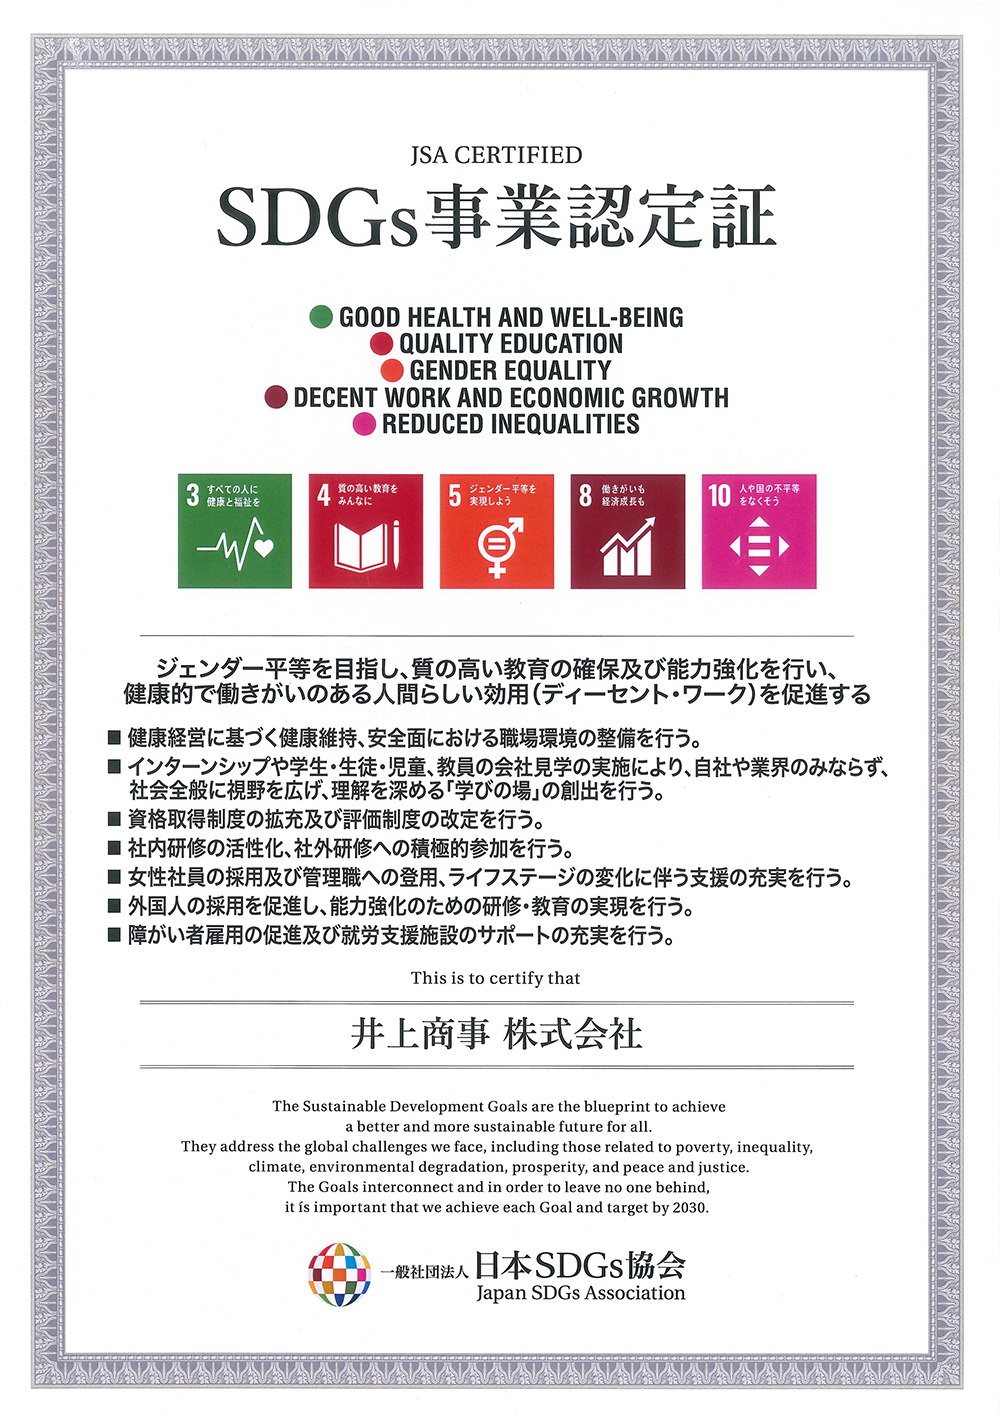 SDGs 事業認定証